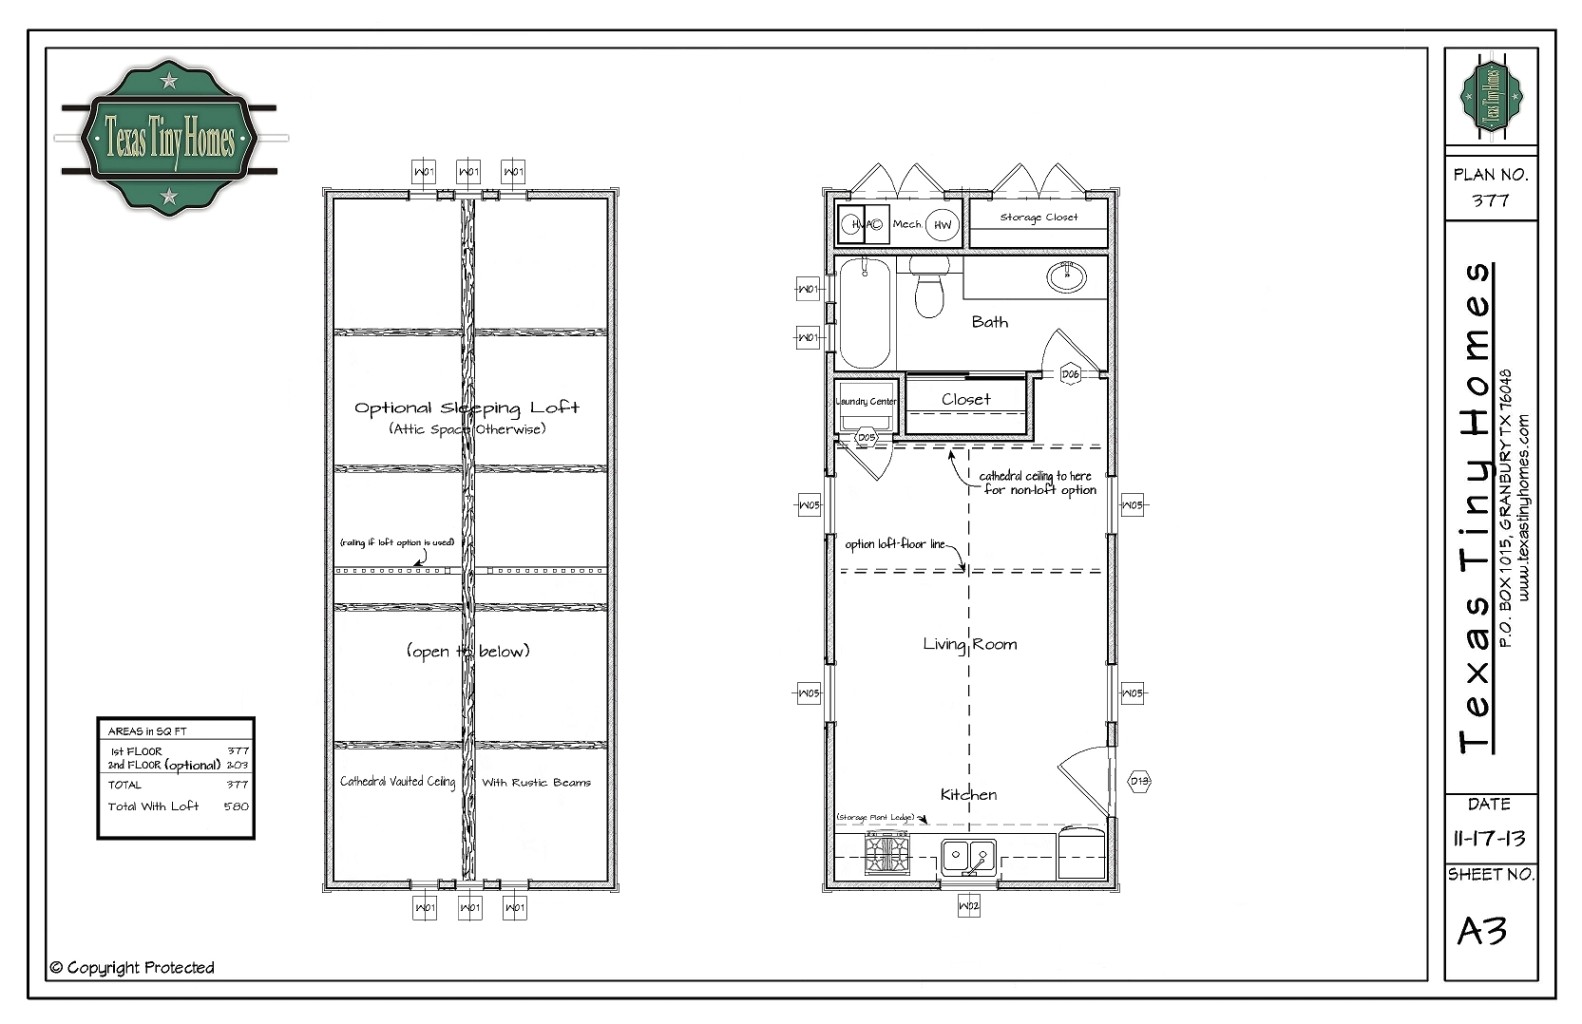 plan for house construction easy home design ideas www fisite regarding unique small home construction plans